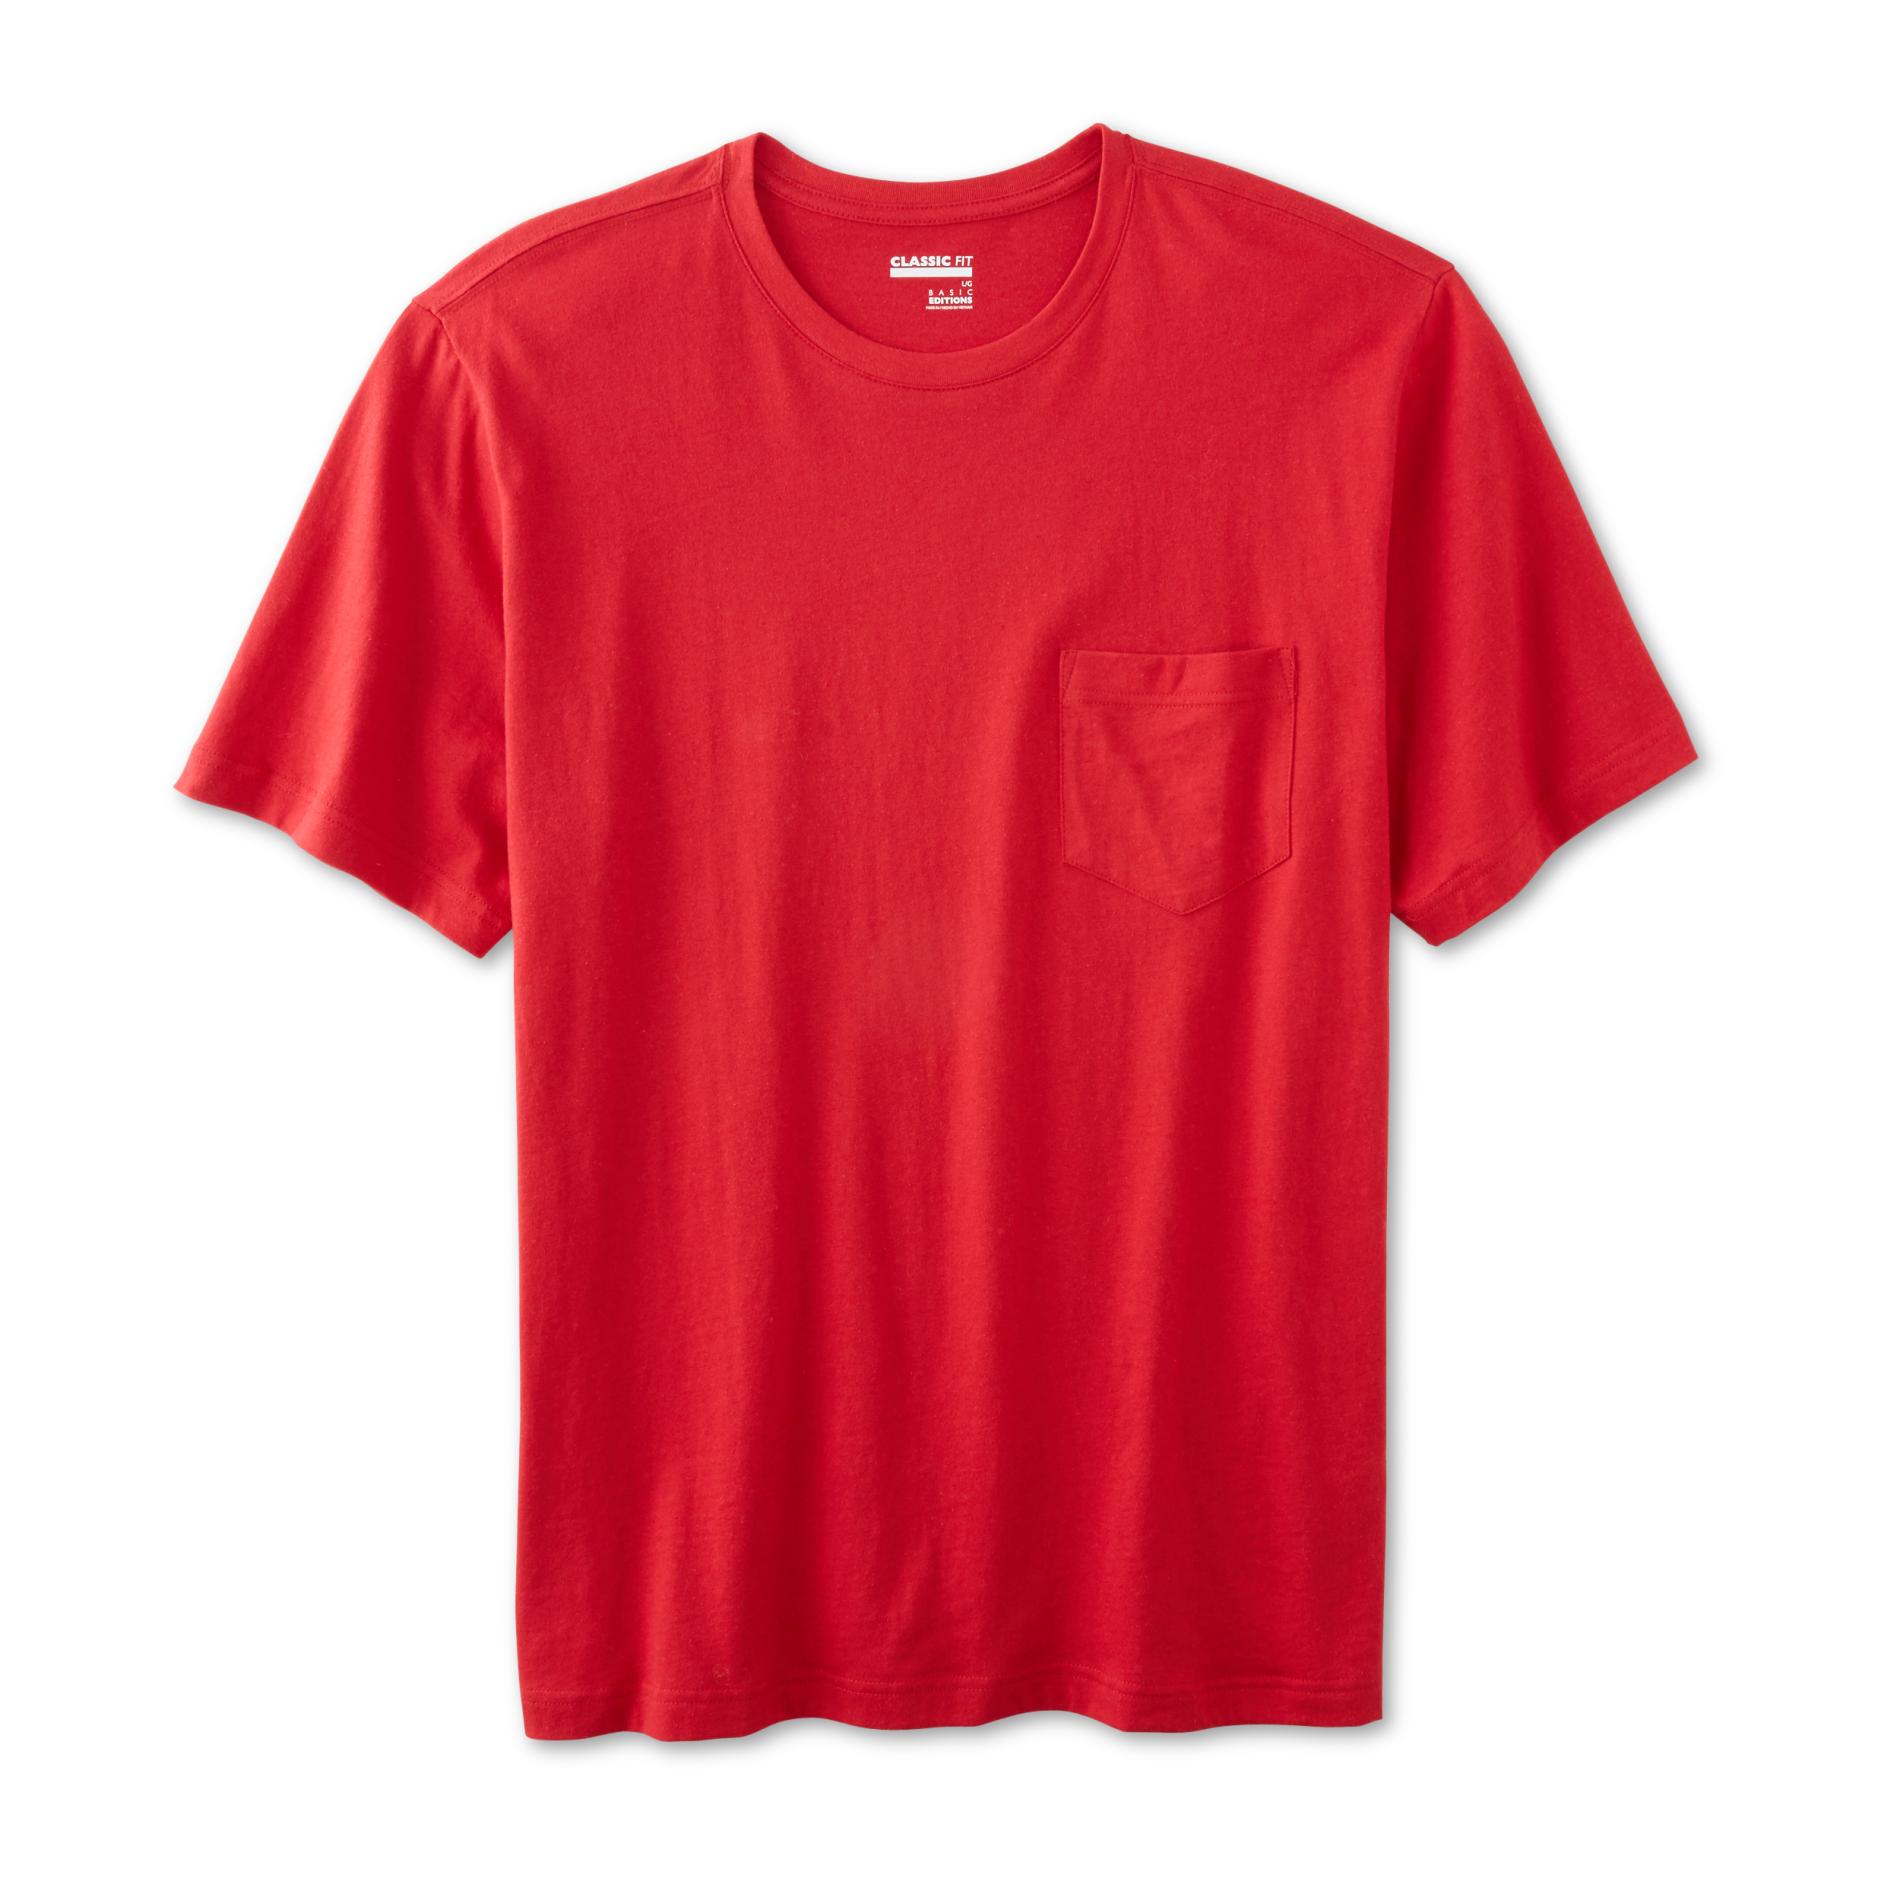 Basic Editions Men's Classic Fit Pocket T-Shirt | Shop Your Way: Online ...